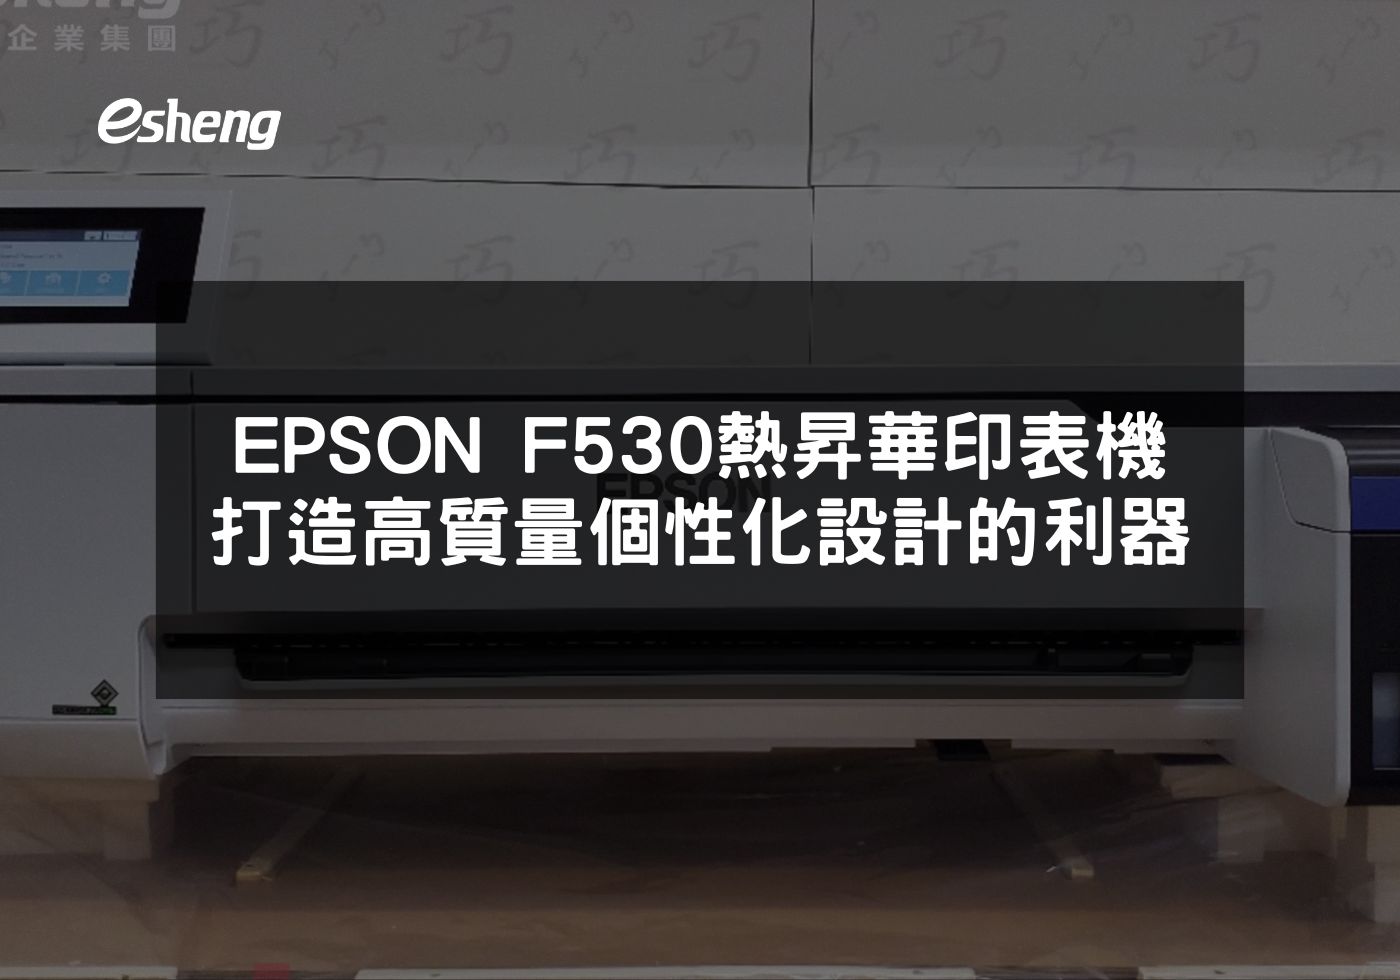 EPSON F530熱昇華印表機 打造高質量個性化設計的利器